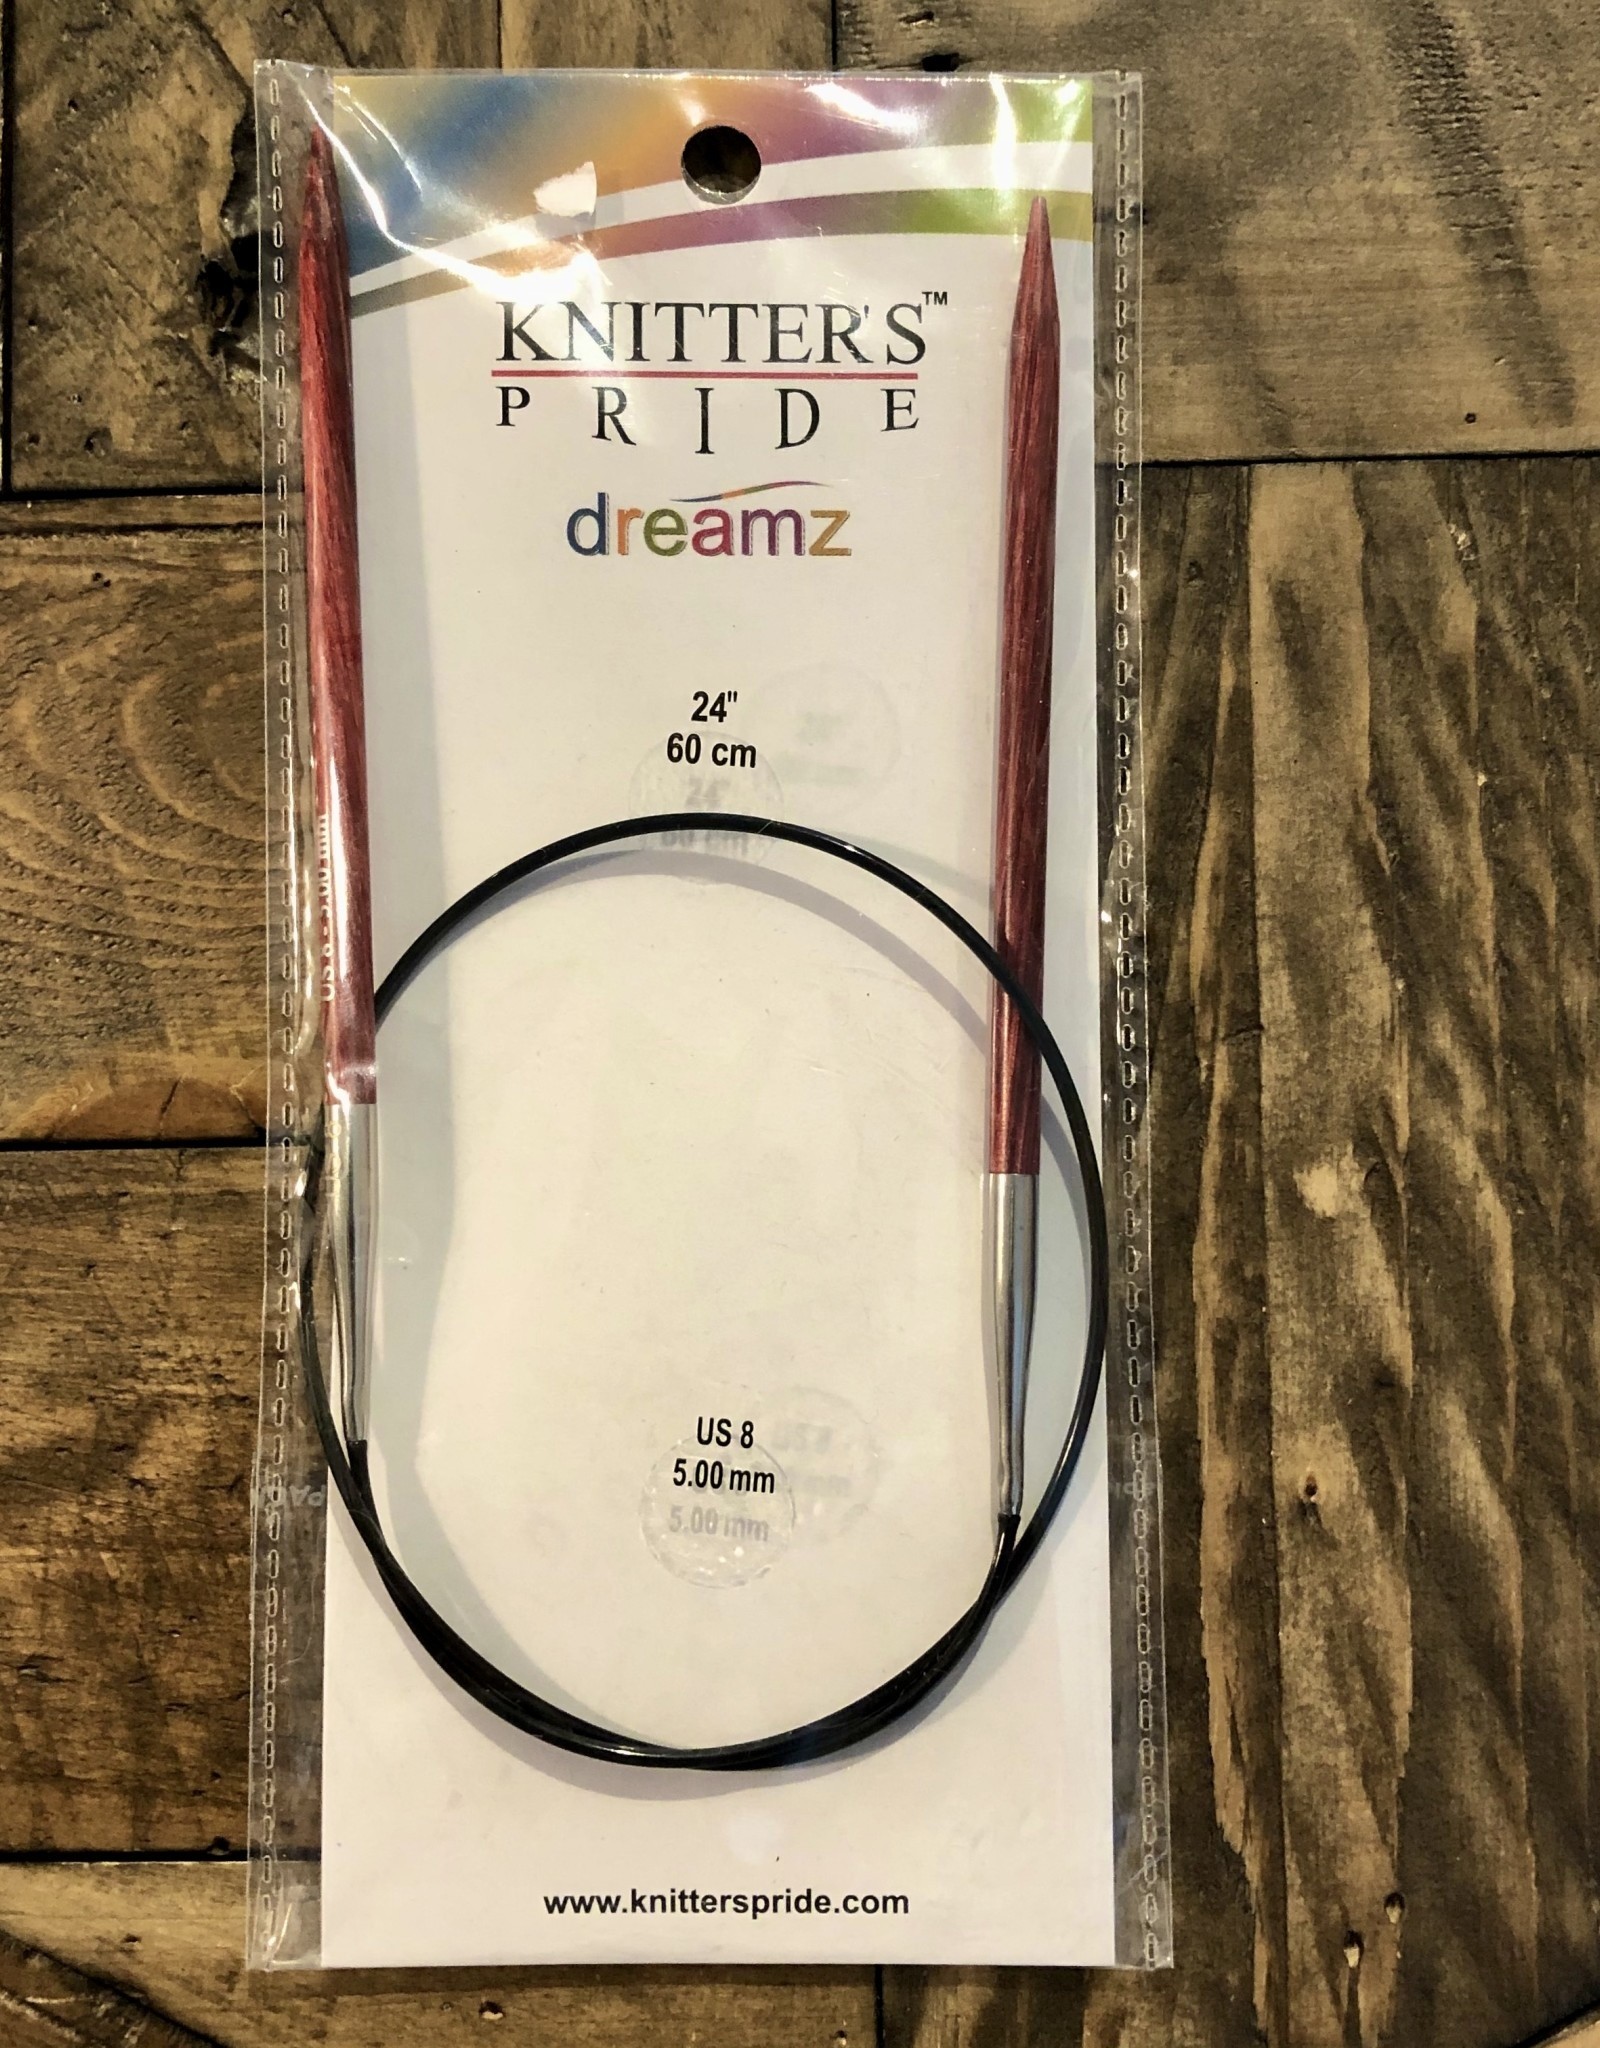 Knitters Pride Dreamz Circular Needles